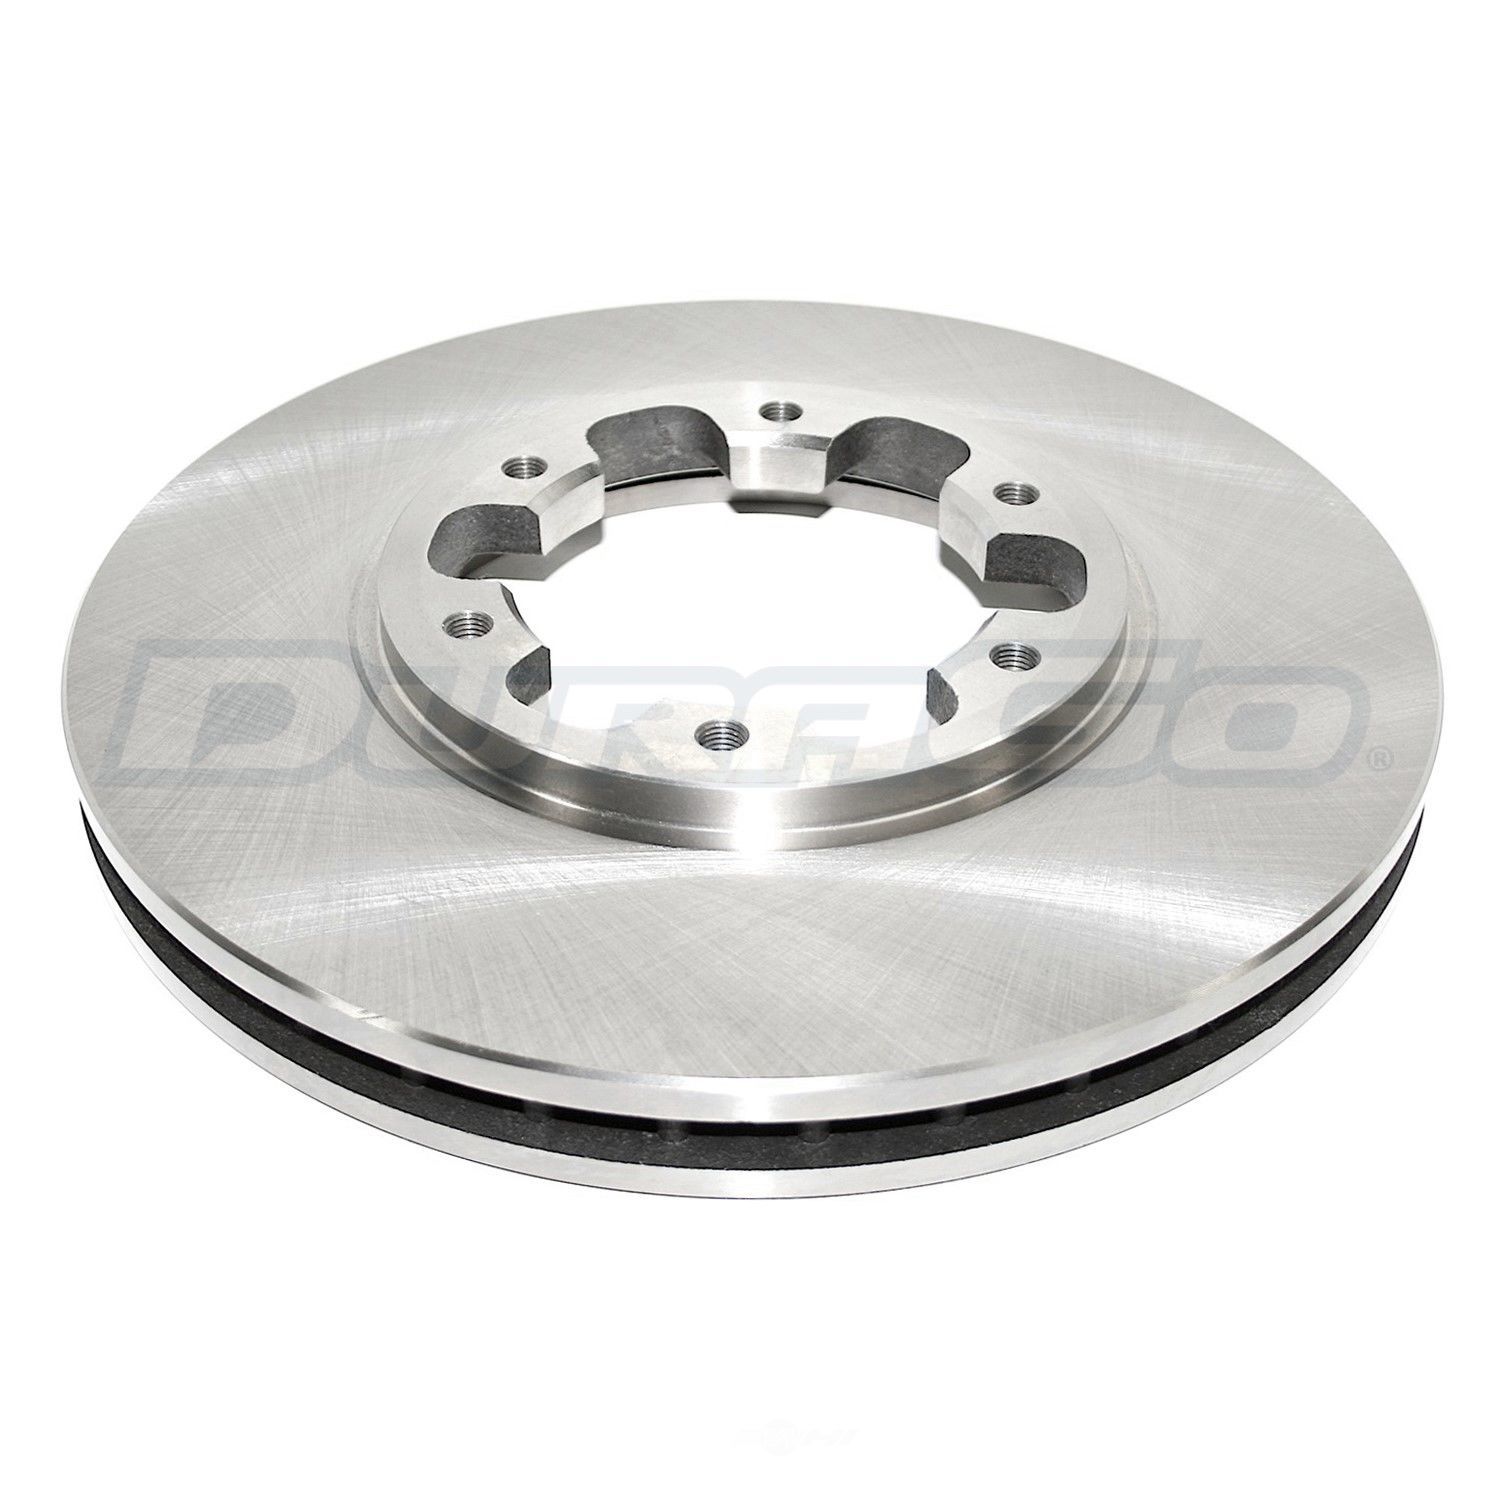 DURAGO - Disc Brake Rotor (Front) - D48 BR31158